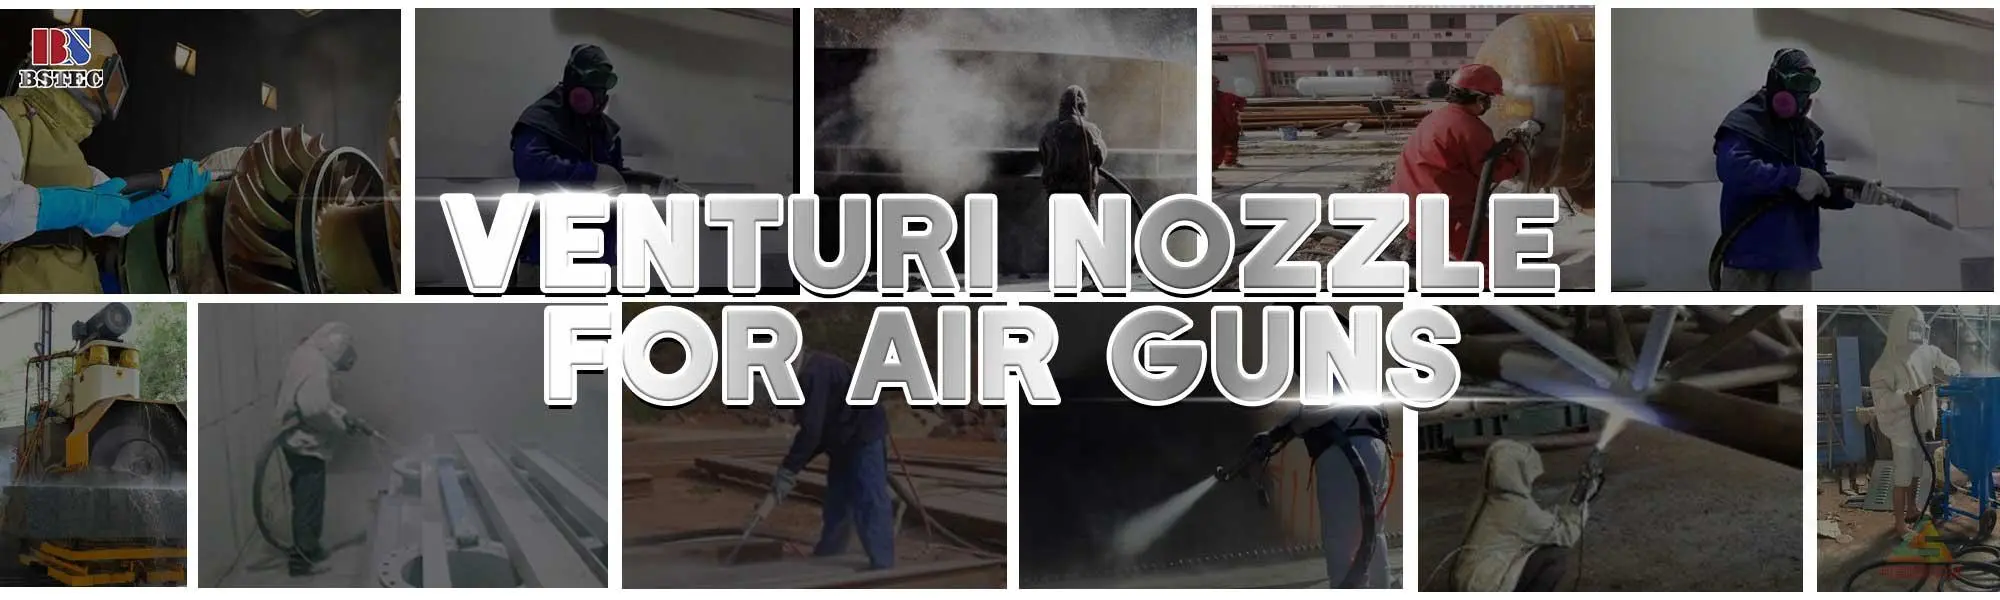 Venturi Nozzle for Air Guns   